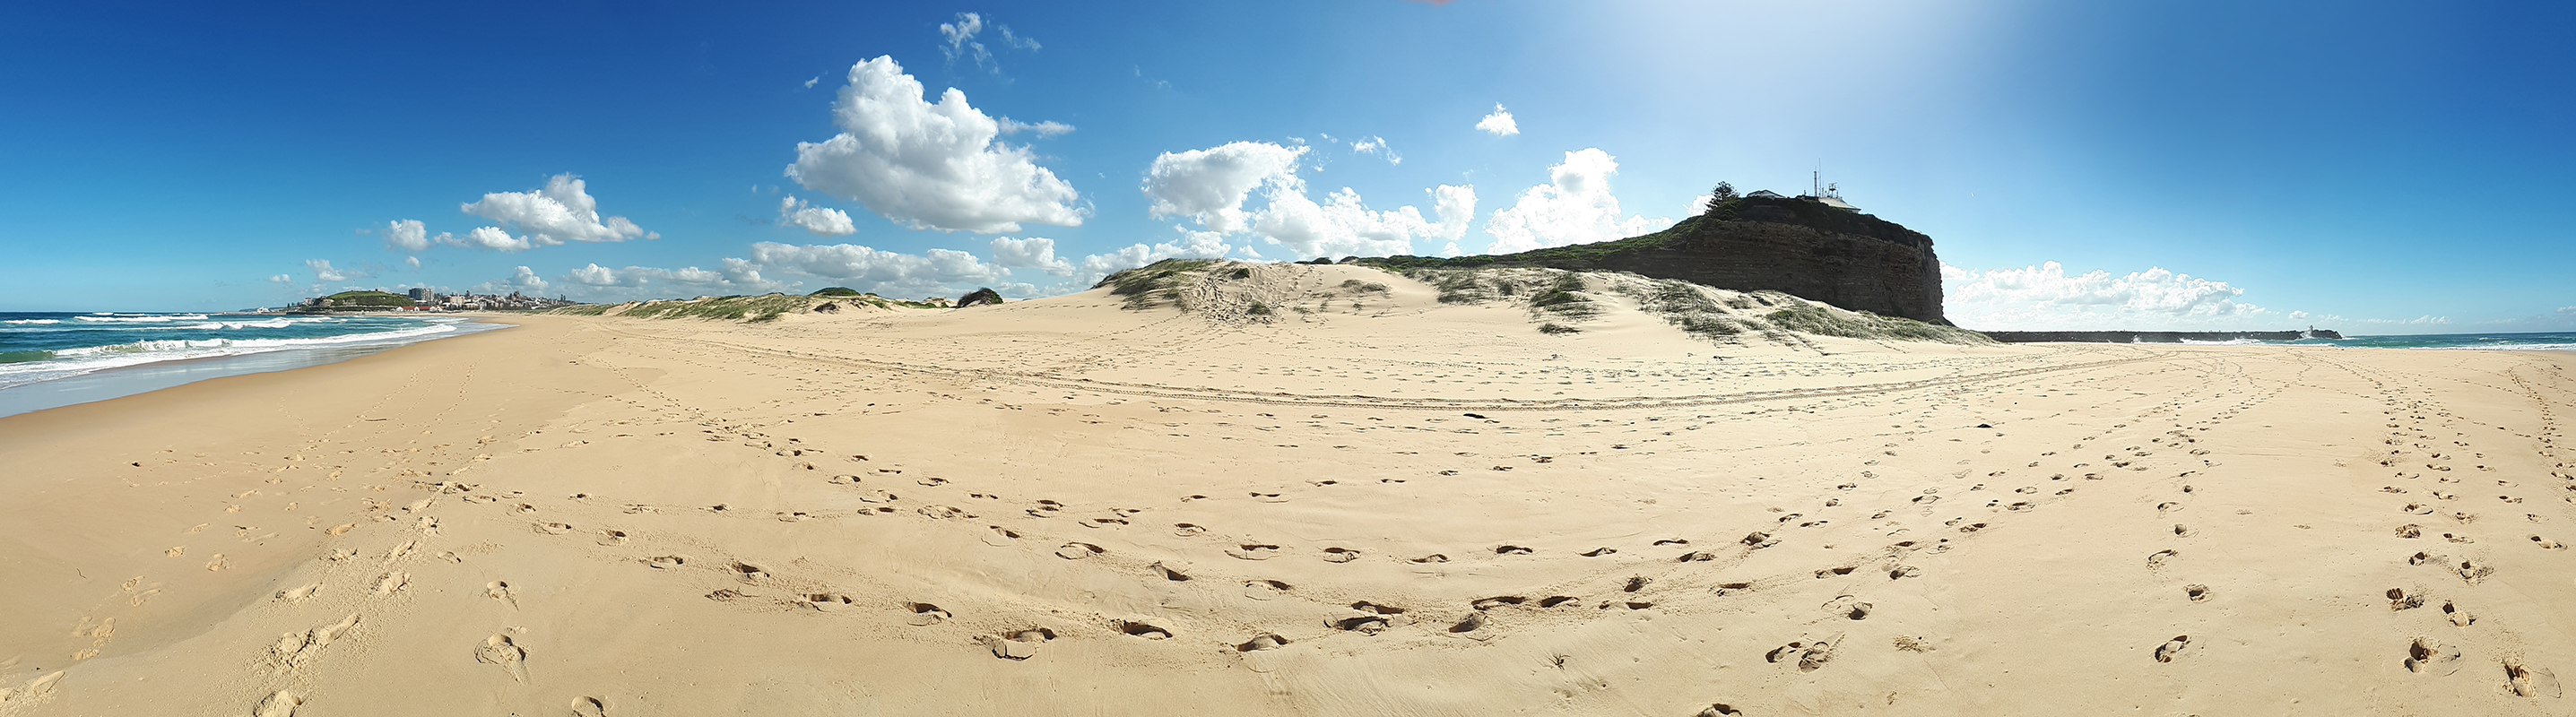 photograph panorama of nobody's head and beach in newcastle australia